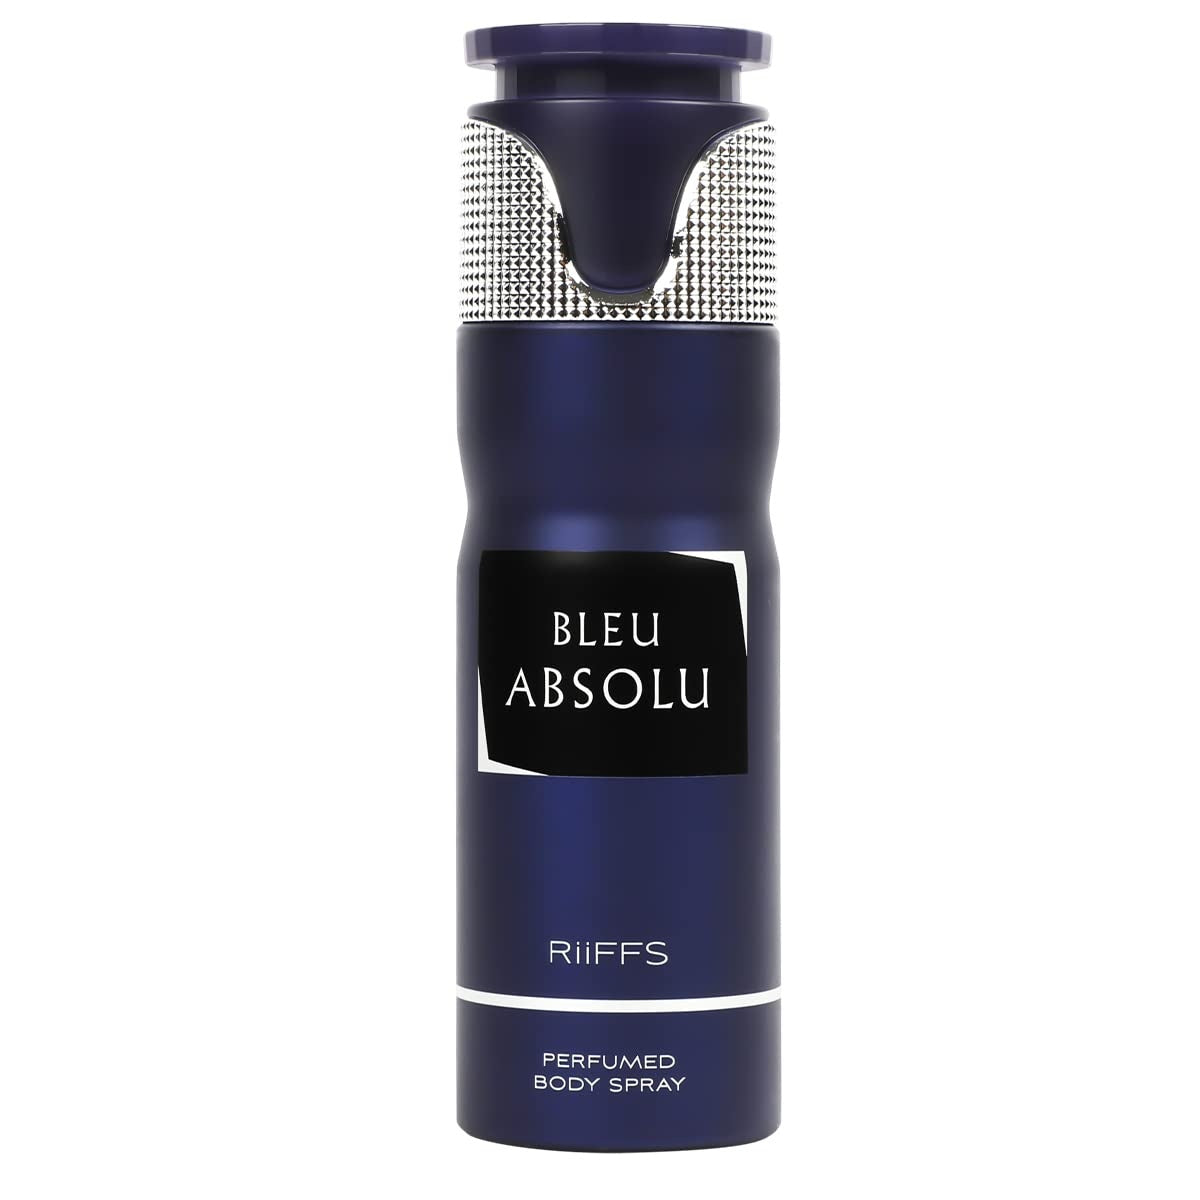 RIIFFS Bleu absolu body spray 200 ml